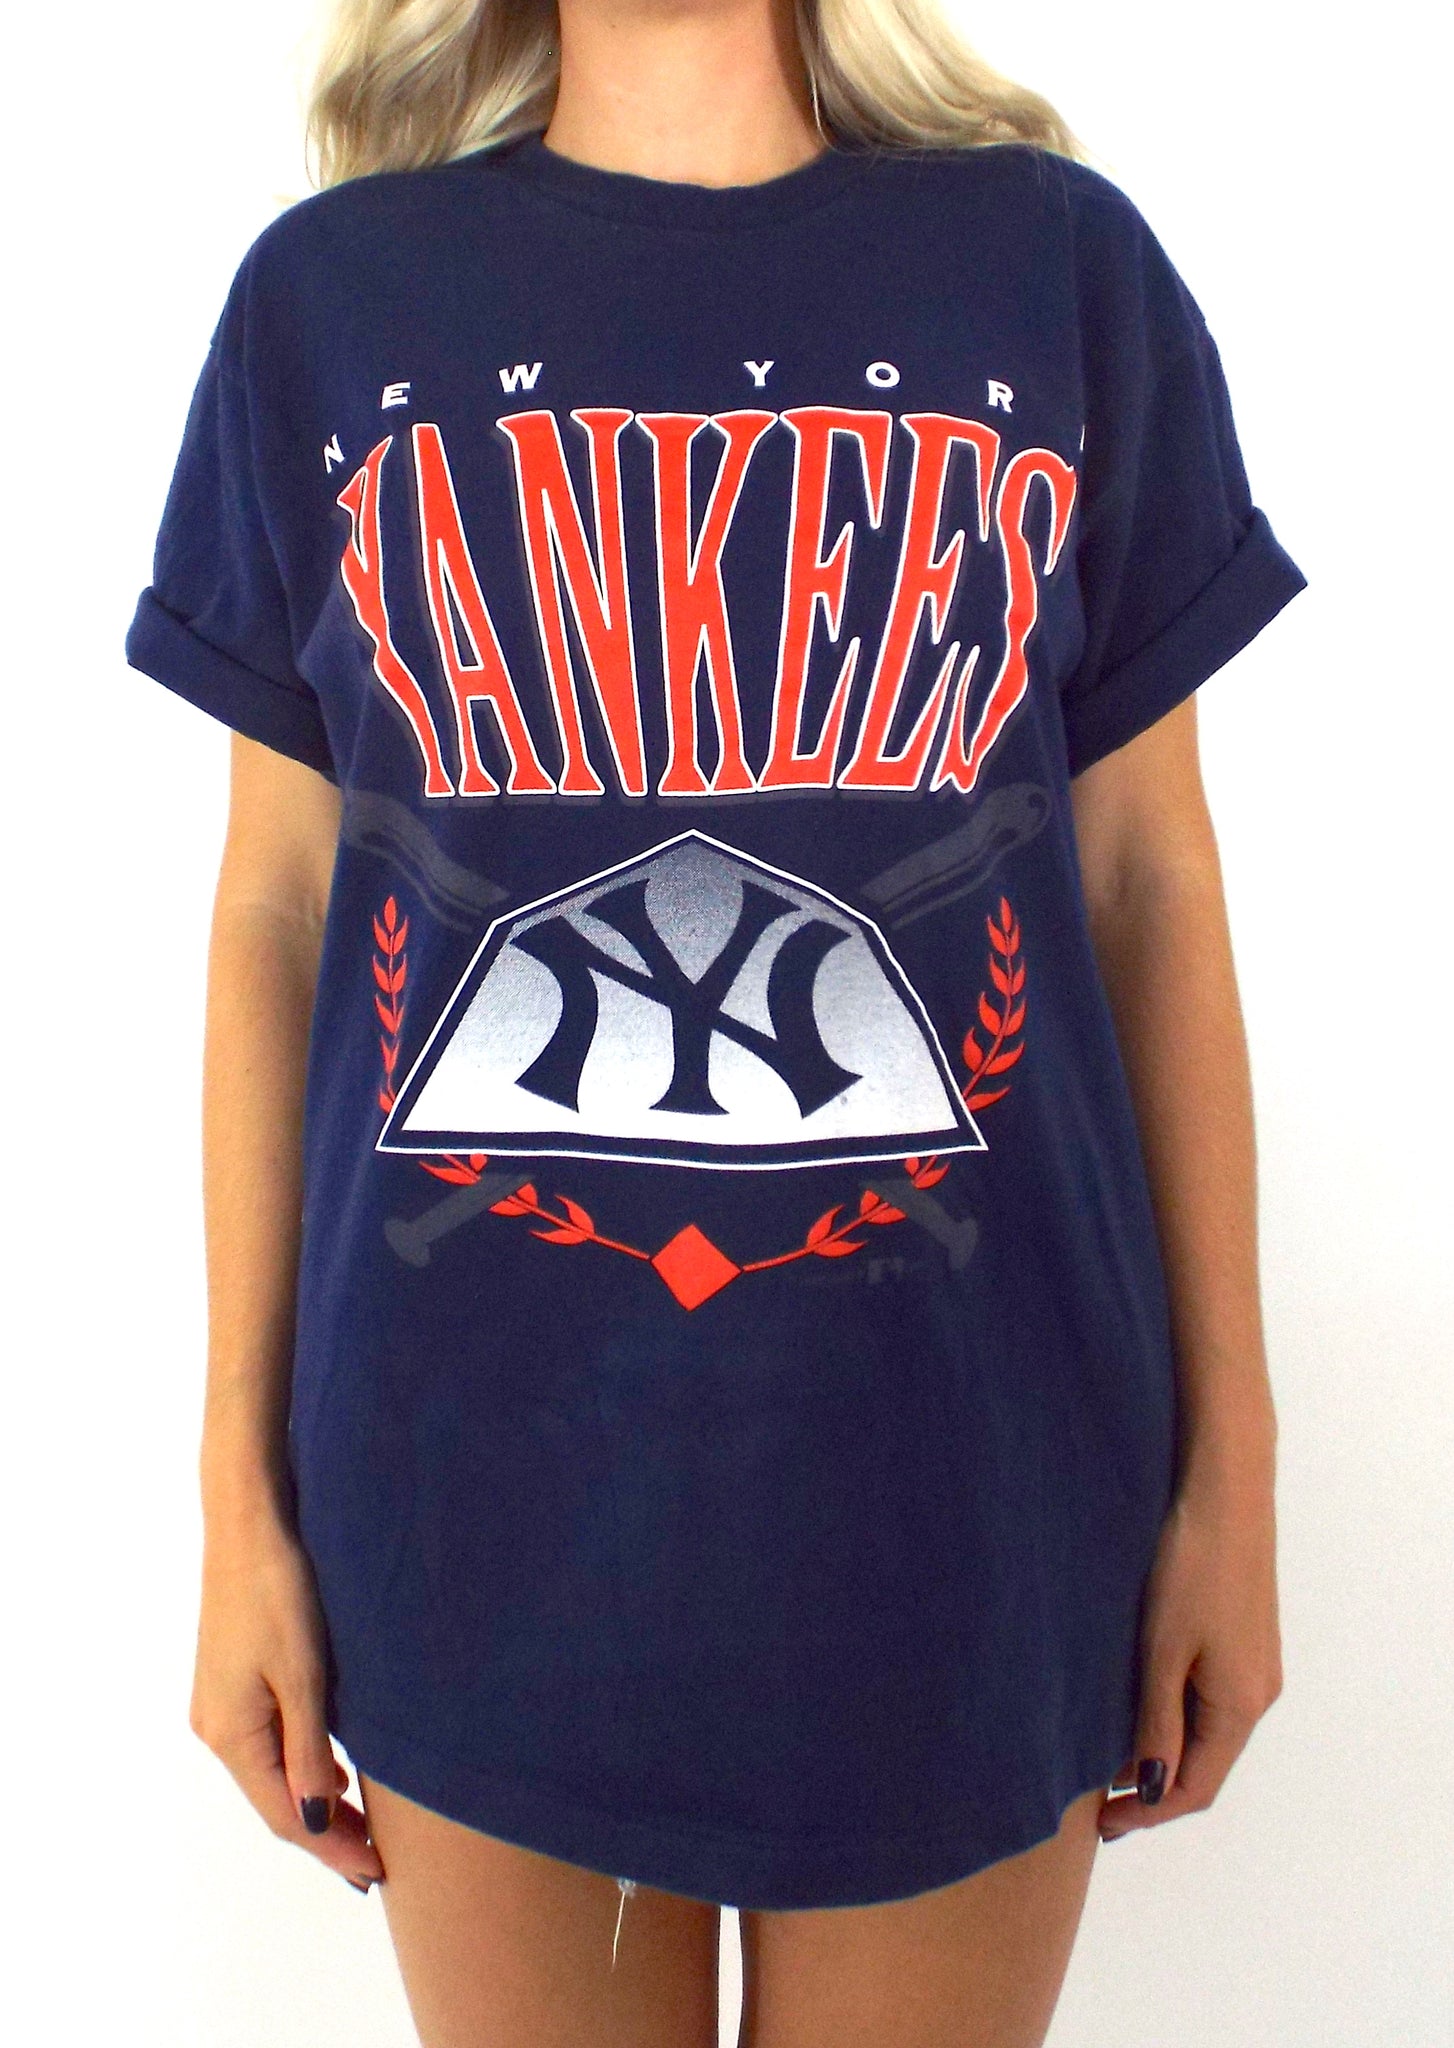 Vintage NY Yankees long sleeve tee - navy with - Depop